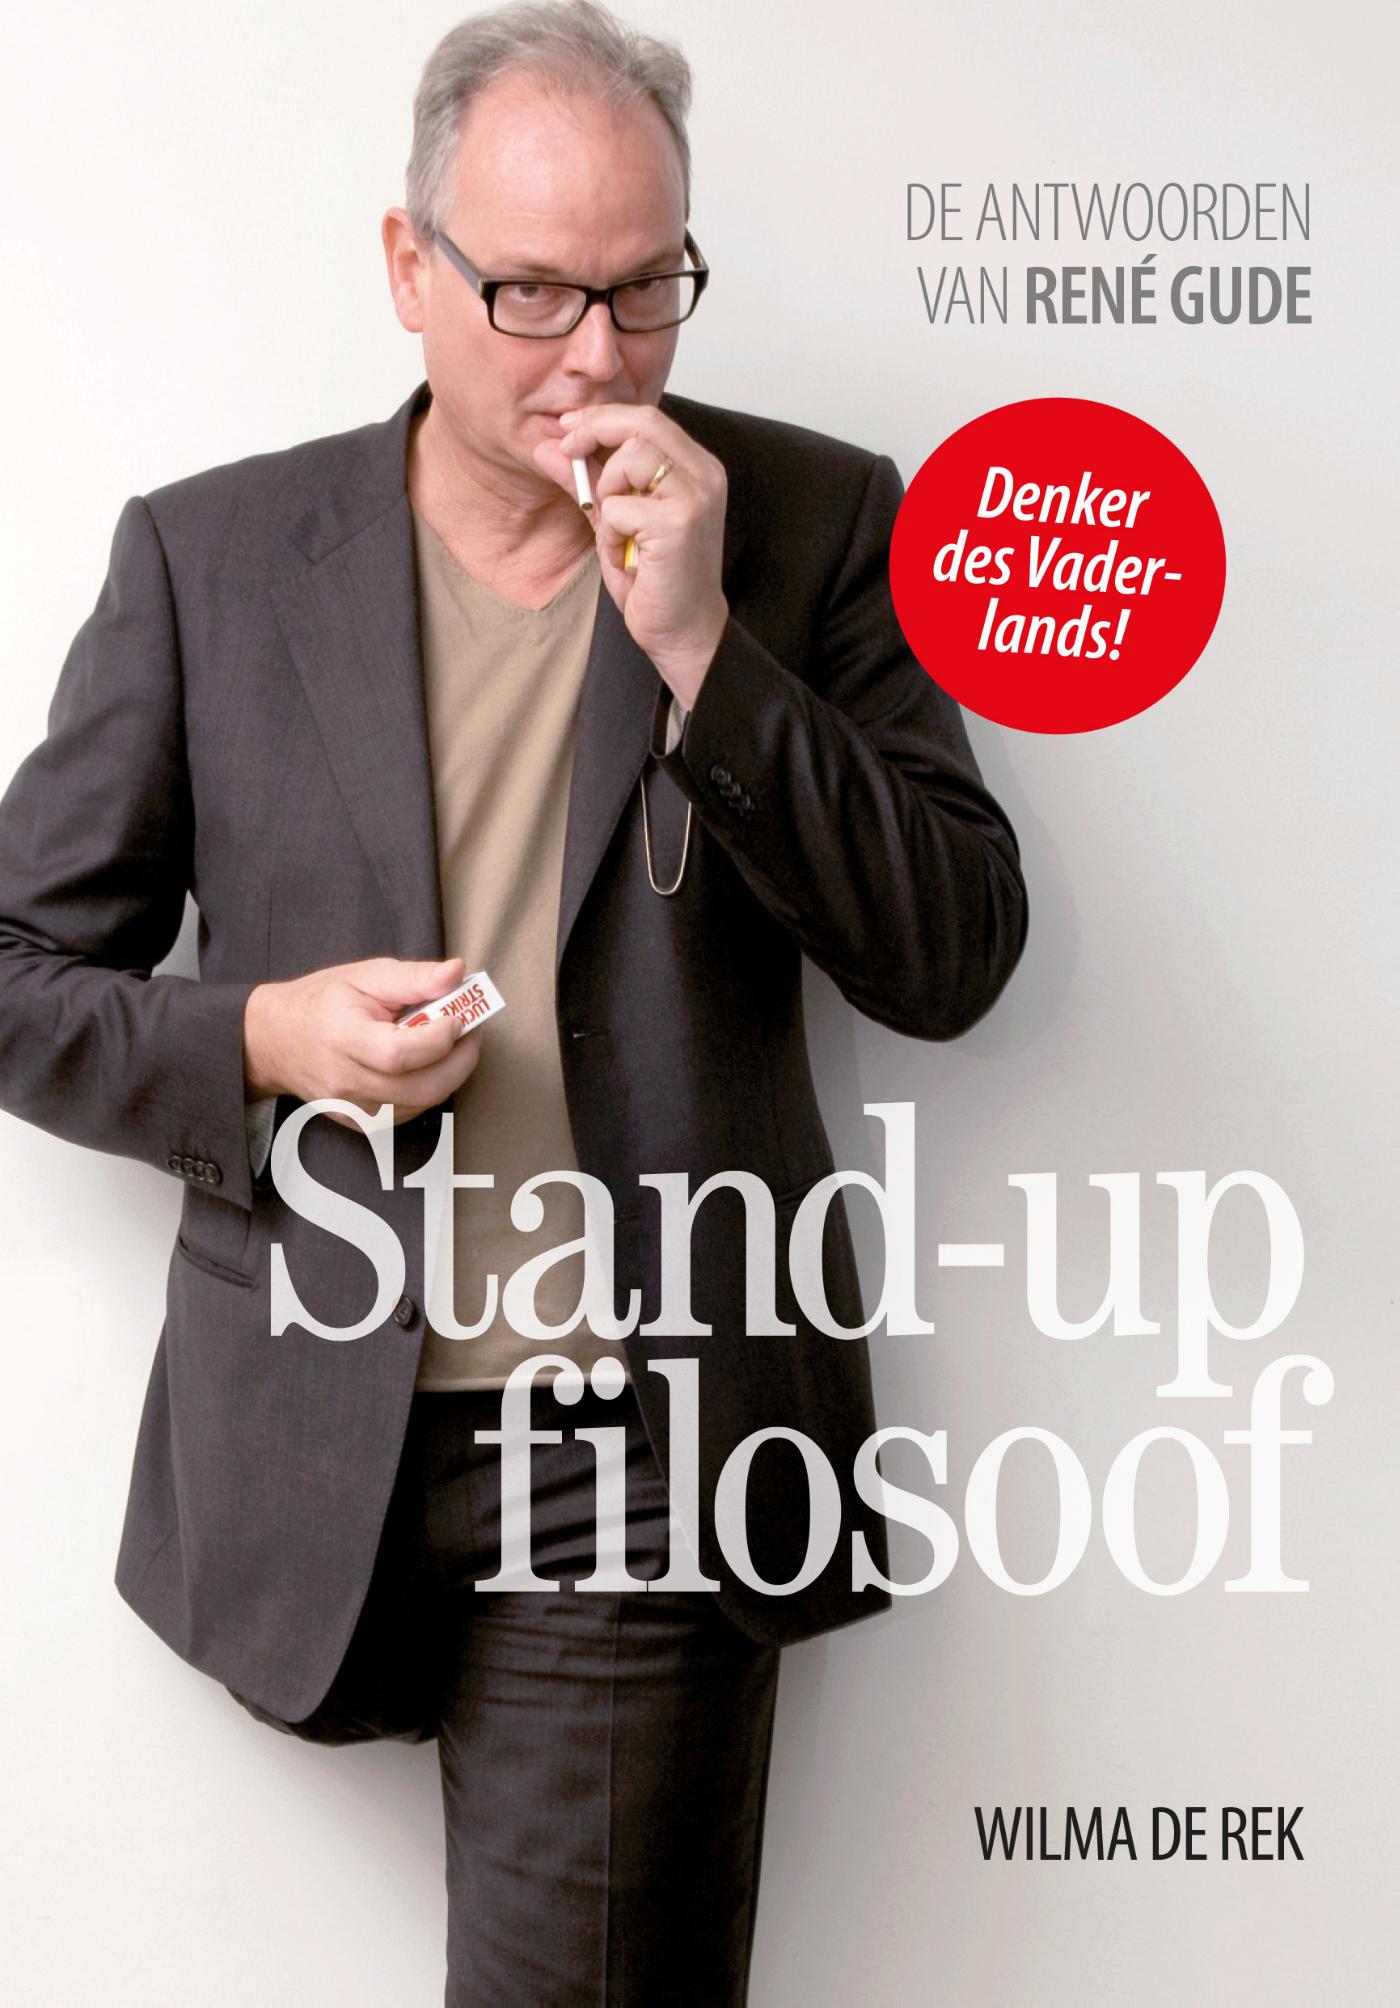 Stand-up filosoof (Ebook)